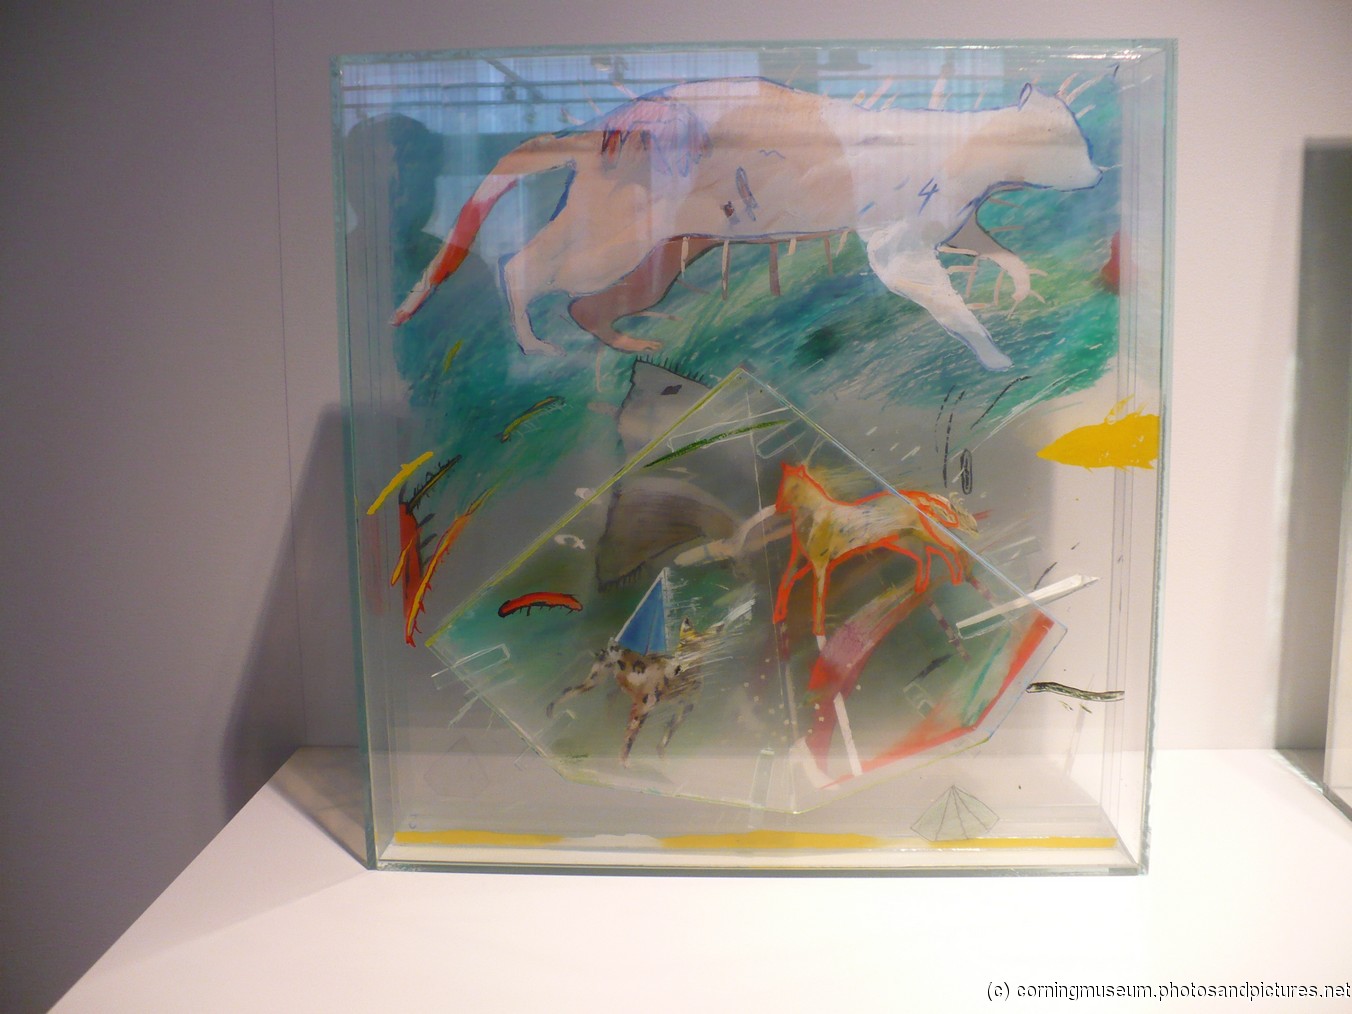 Dana Zamecnikova's The Little Circus at Corning Museum of Glass.jpg
